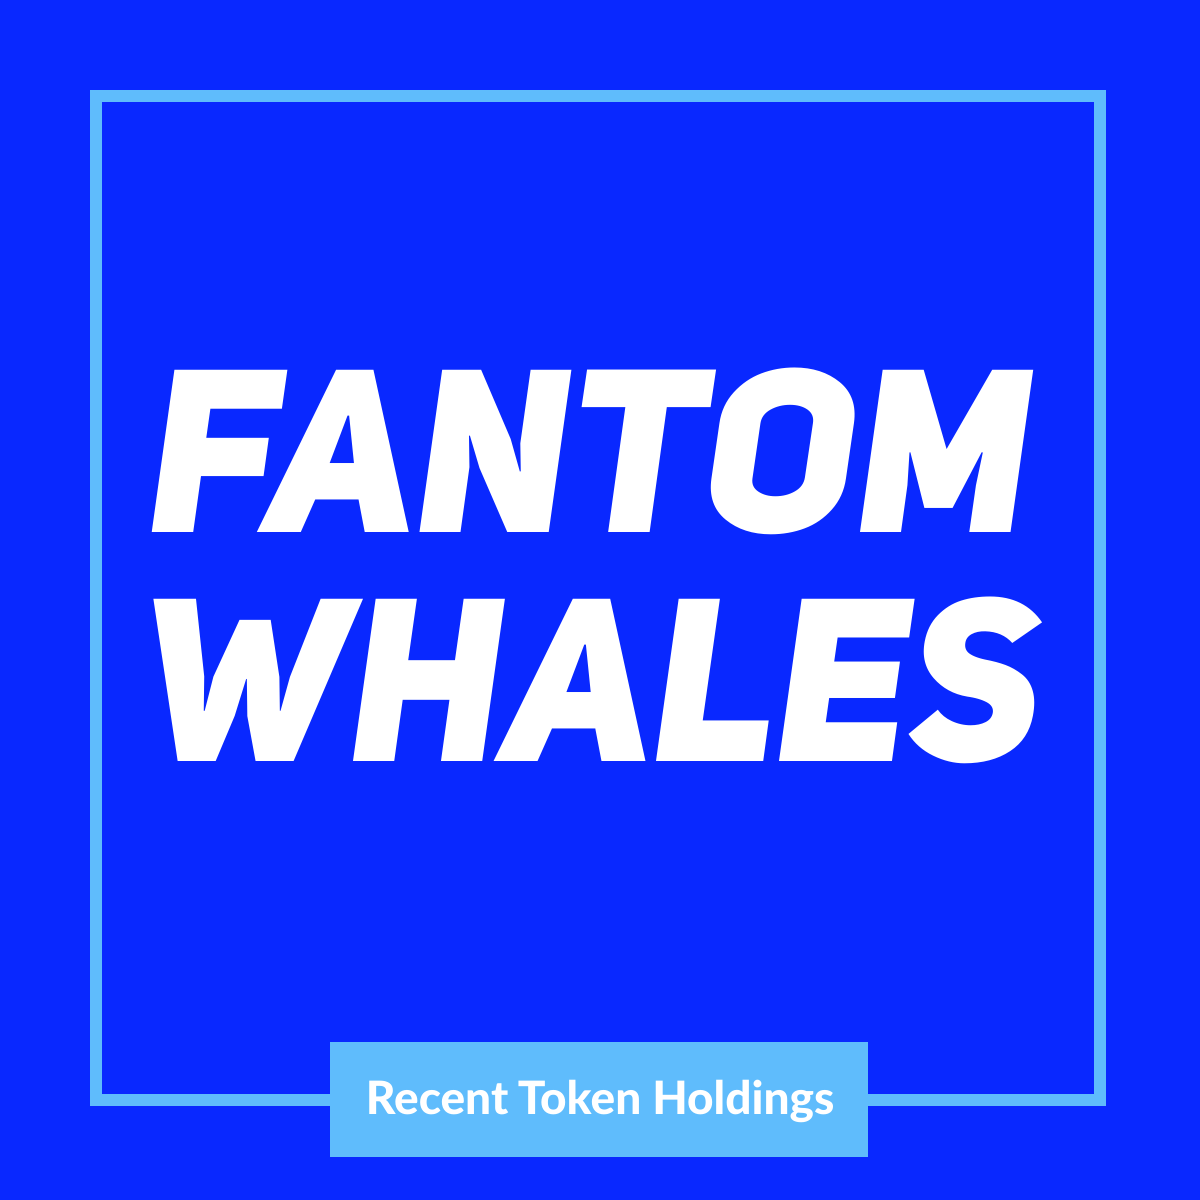 Fantom Whales